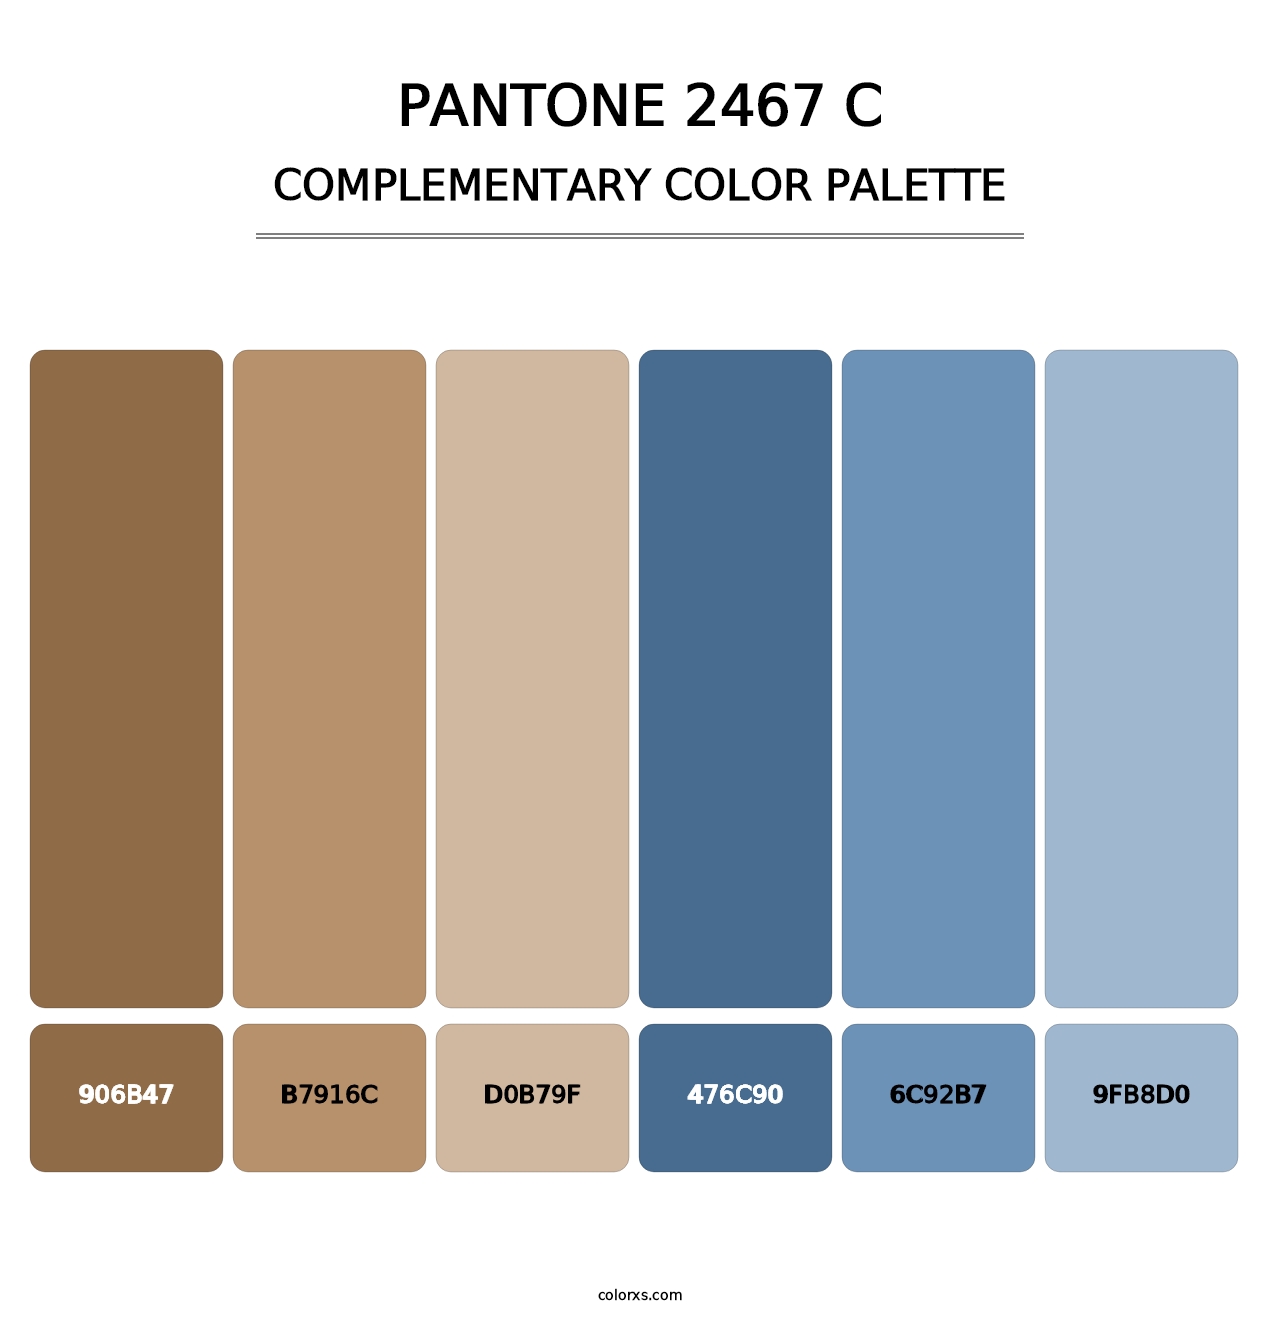 PANTONE 2467 C - Complementary Color Palette